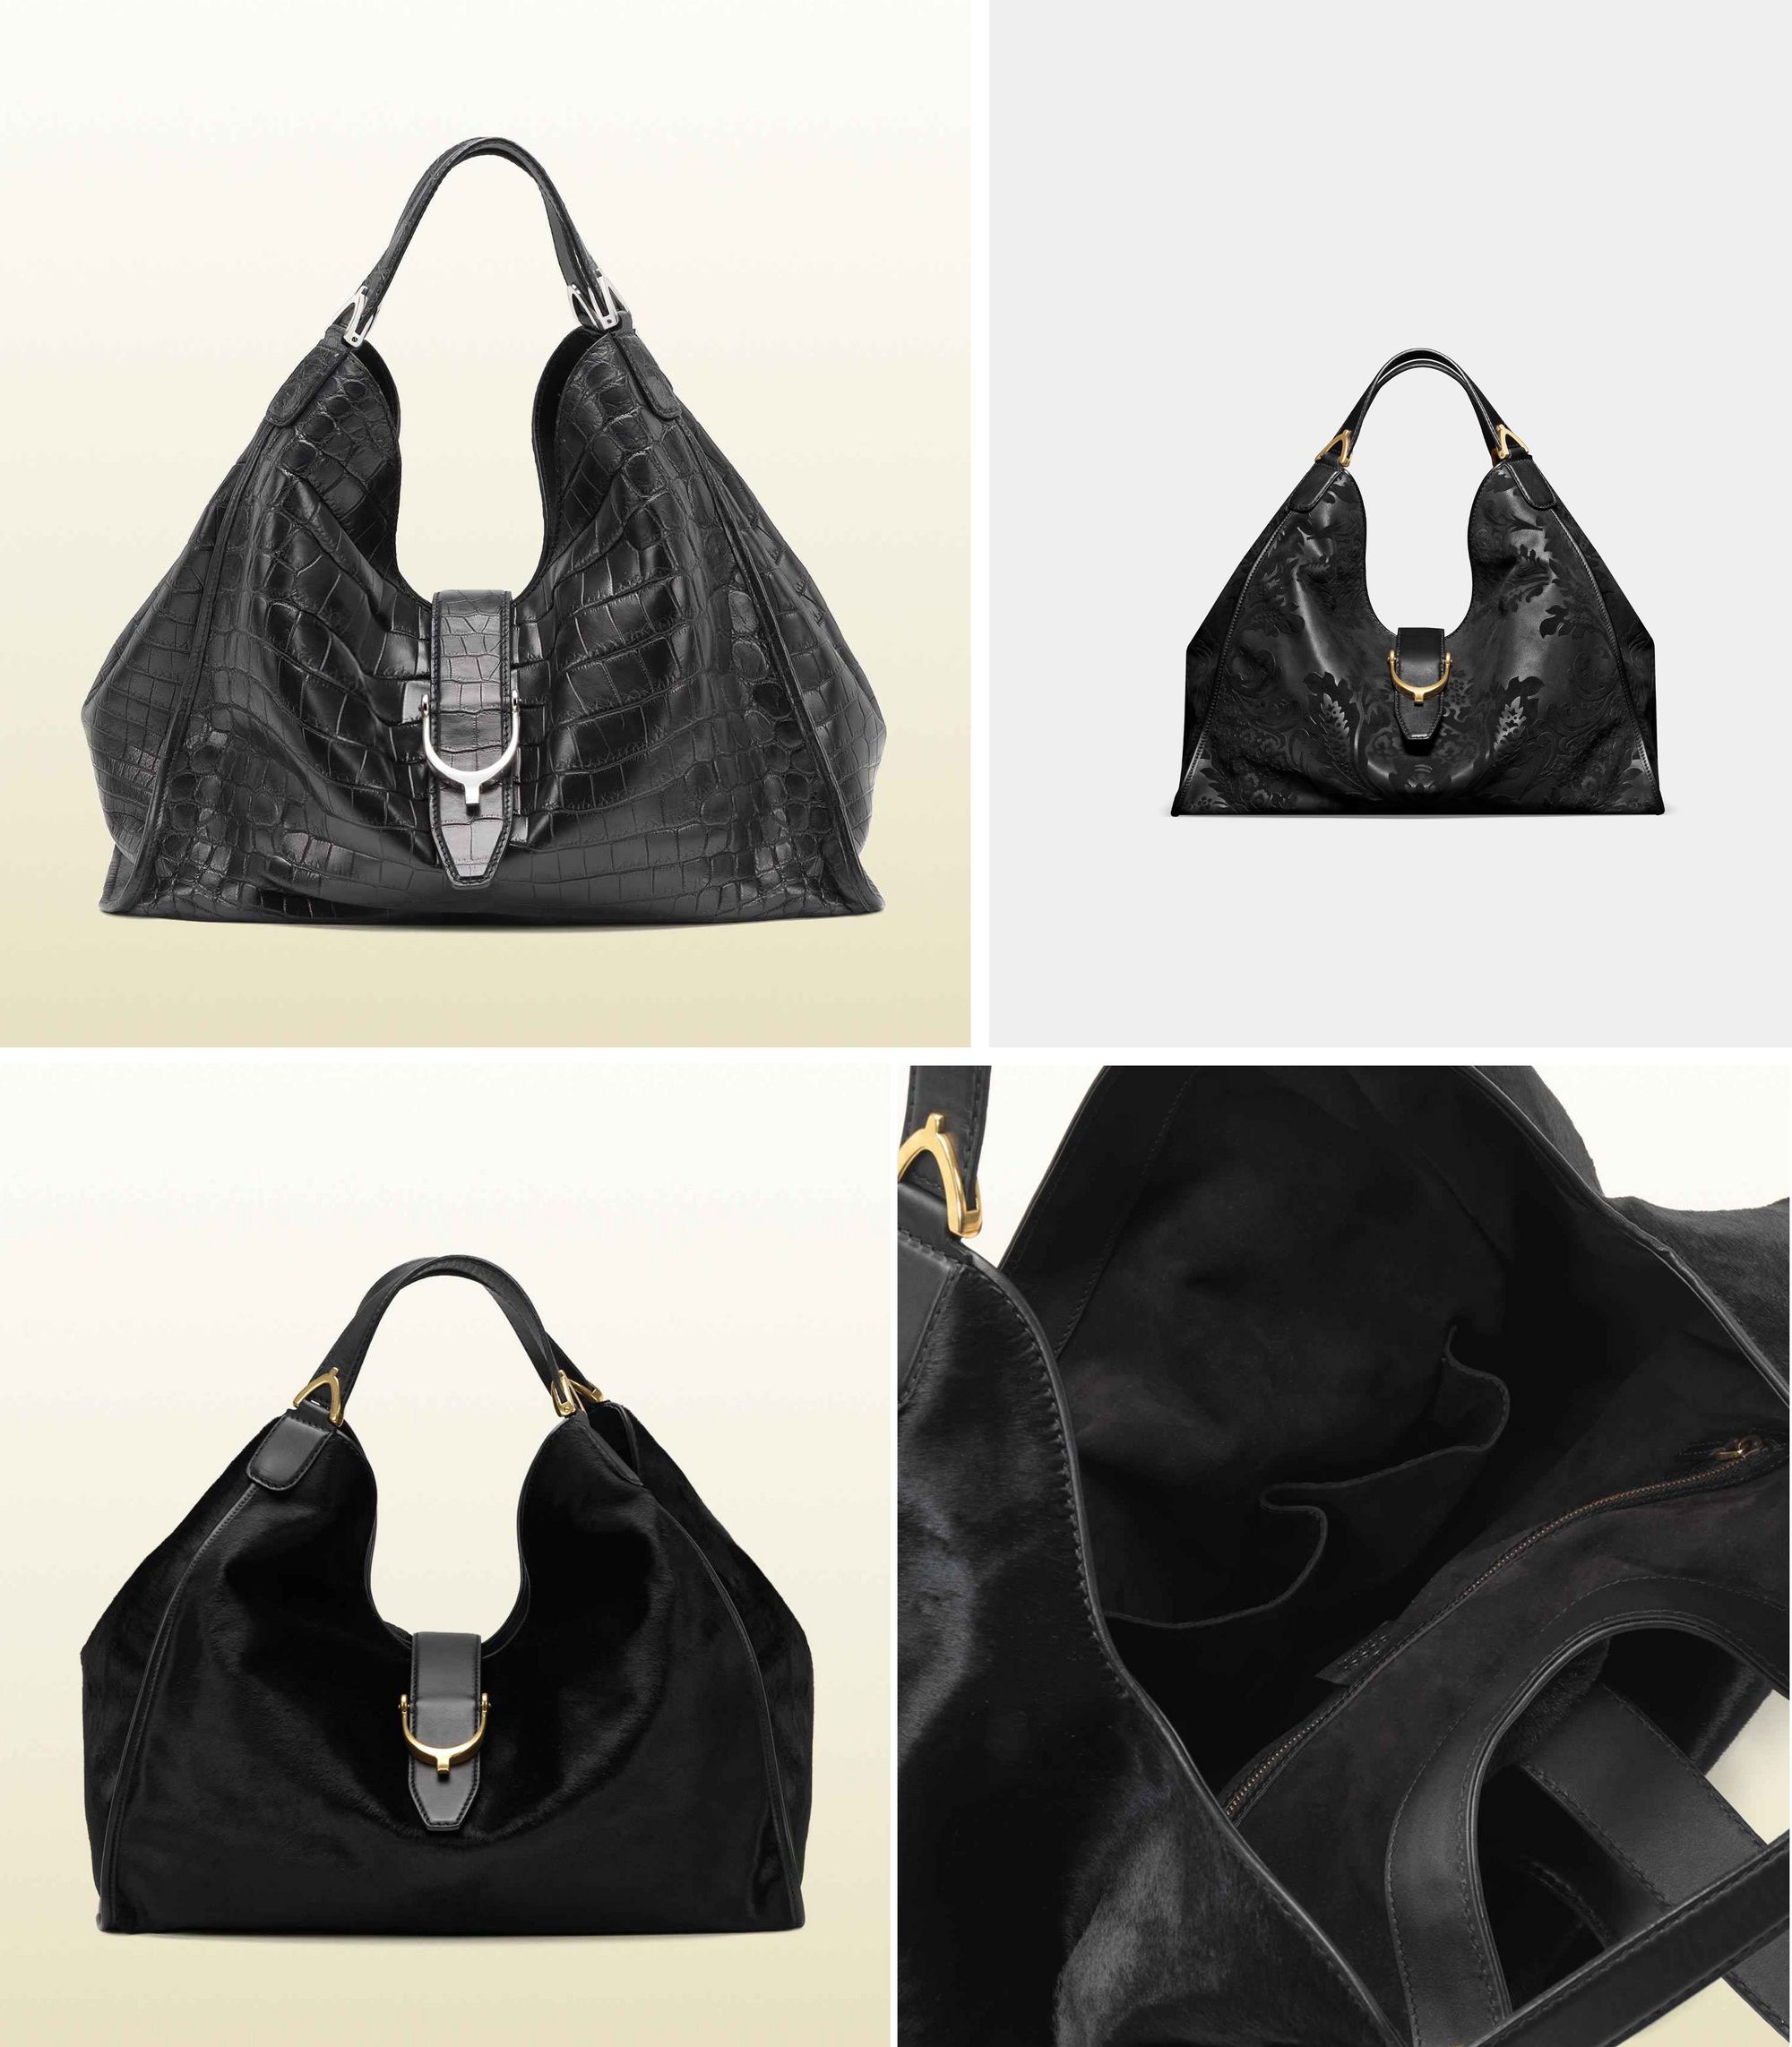 Gucci 'Soft Stirrup' bag in crocodile skin, velvet and pony skin (Photo courtesy | Gucci)